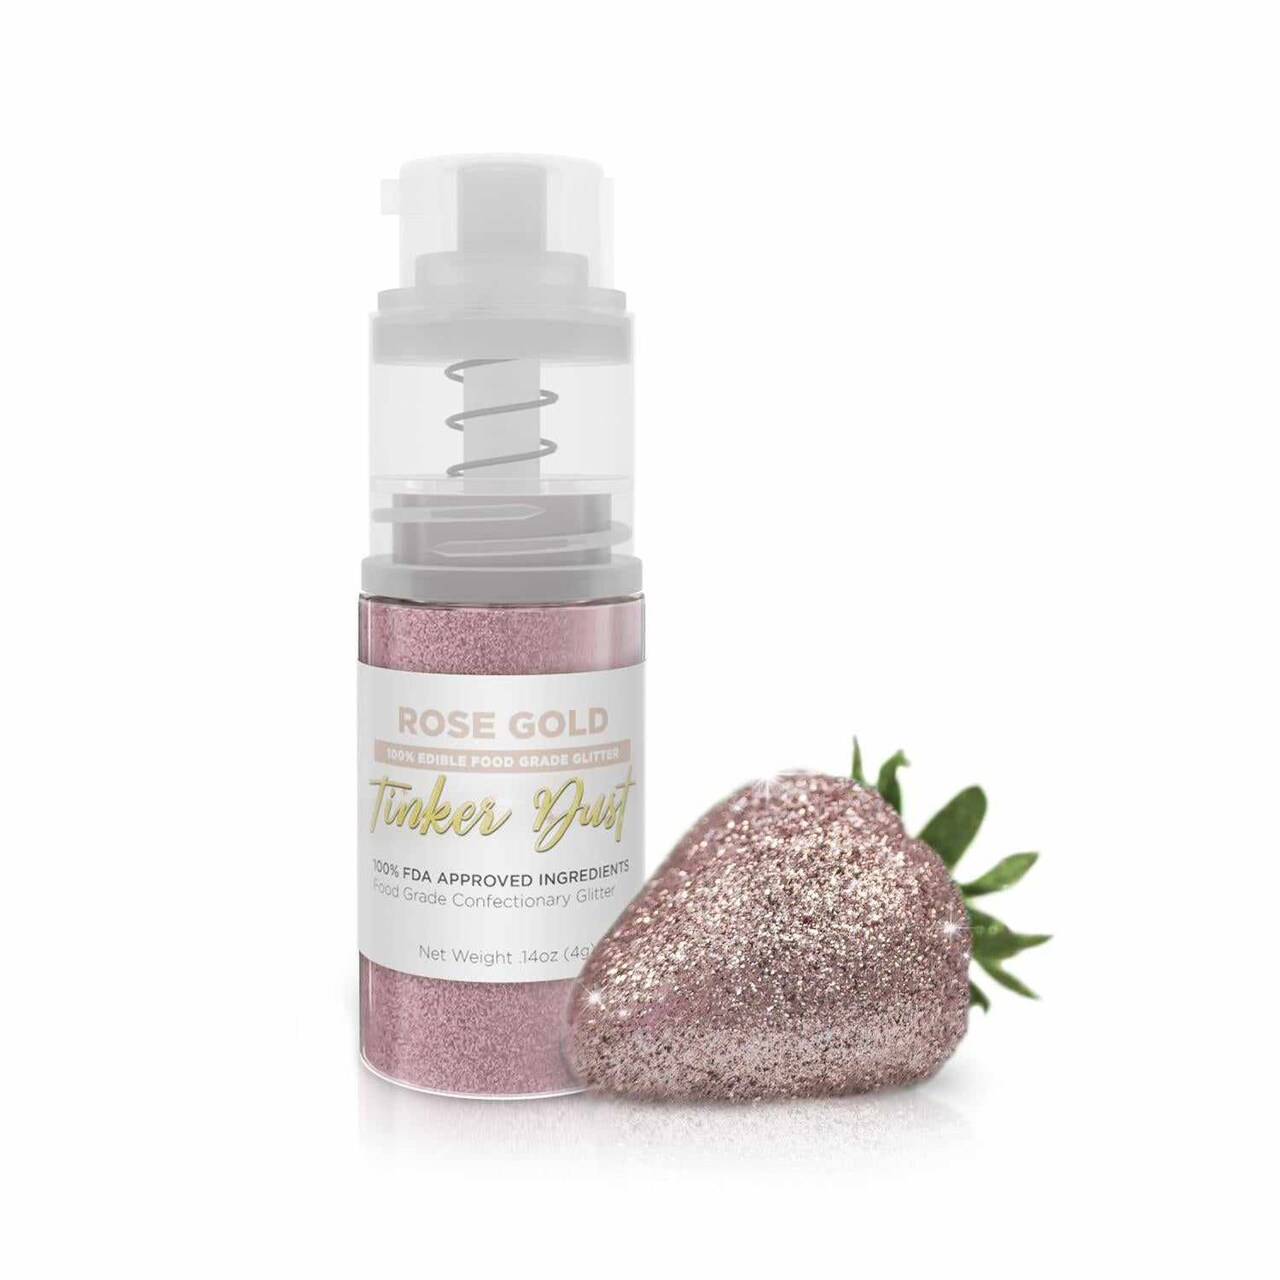 Rose Gold Edible Glitter Spray - Edible Powder Dust Spray Glitter for Food,  Drinks, Strawberries, Muffins, Cake Decorating. FDA Compliant (4 Gram Pump)